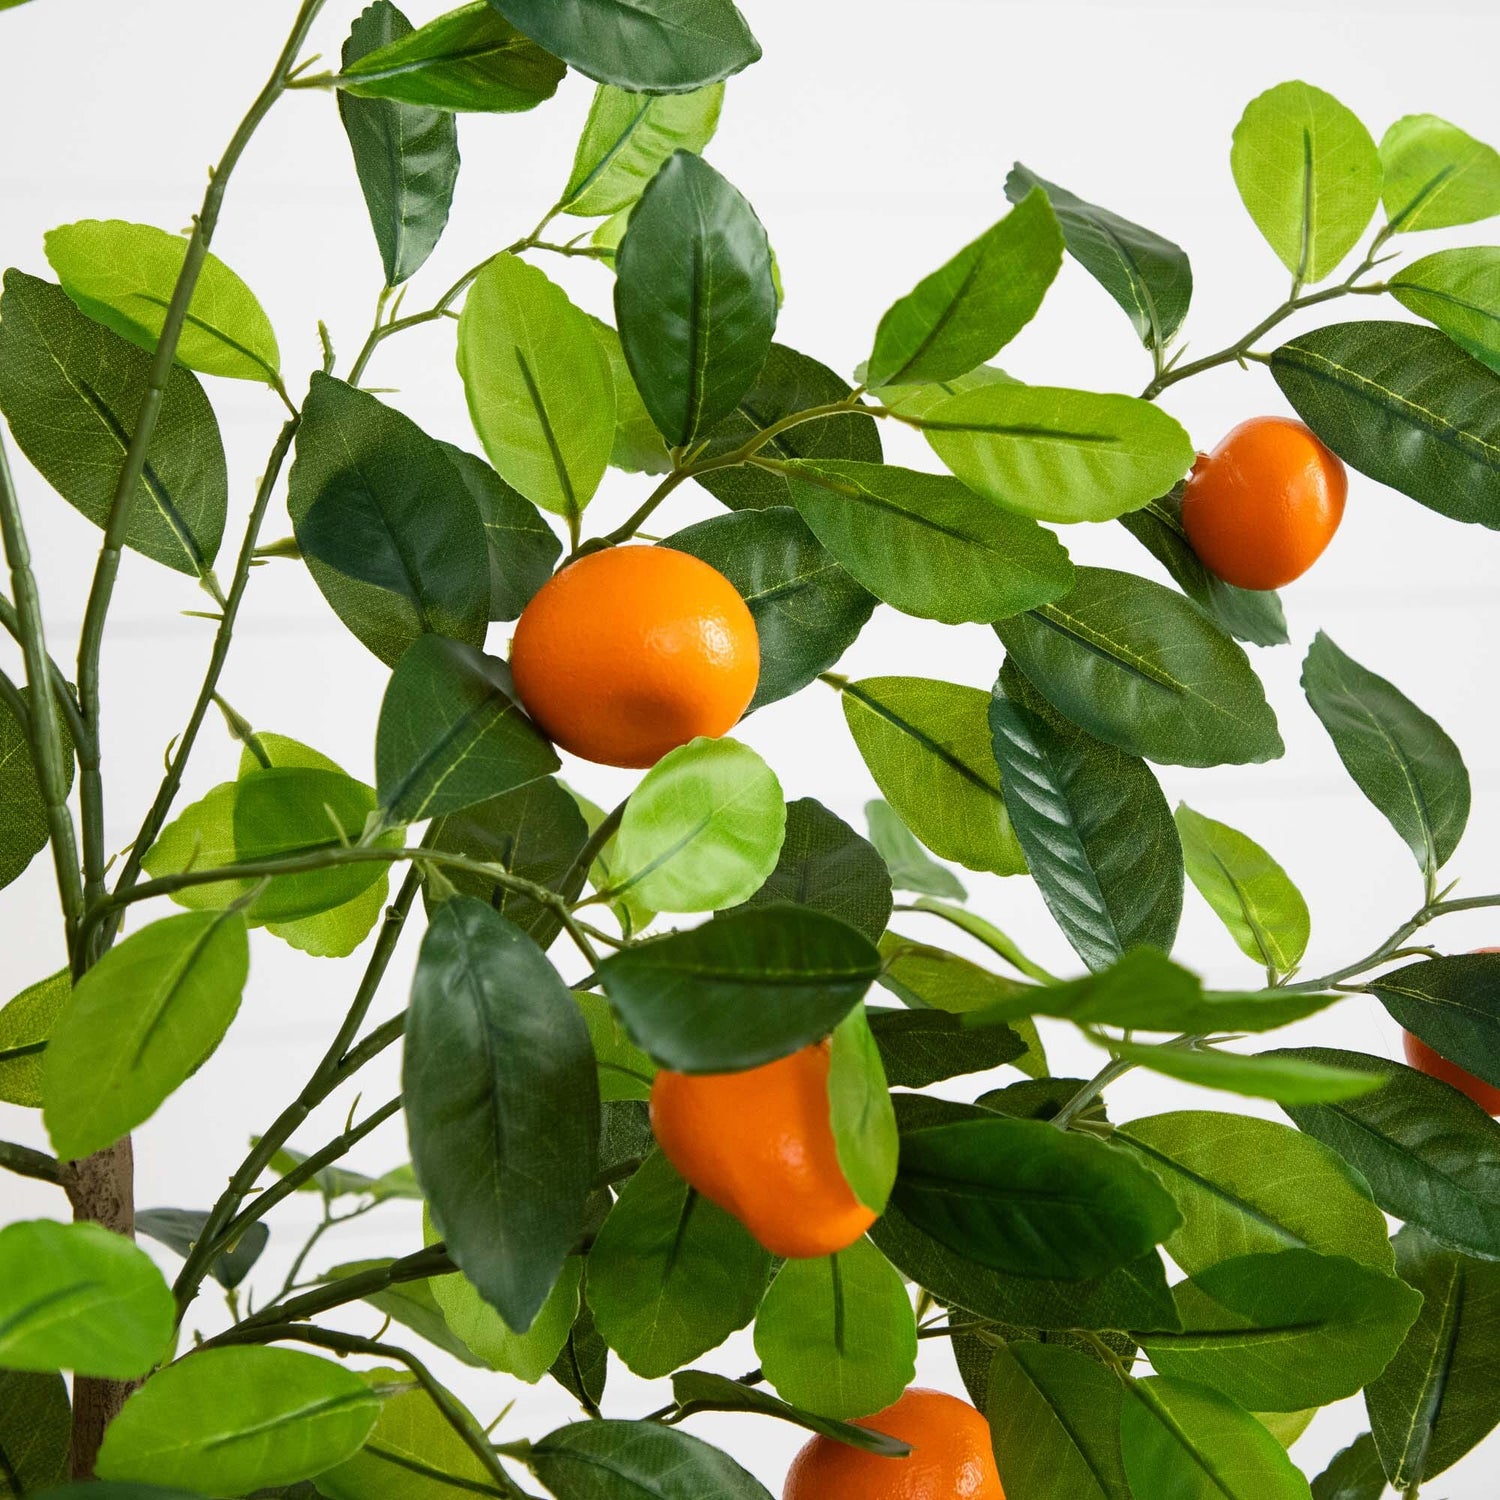 5’ Artificial Tangerine Tree